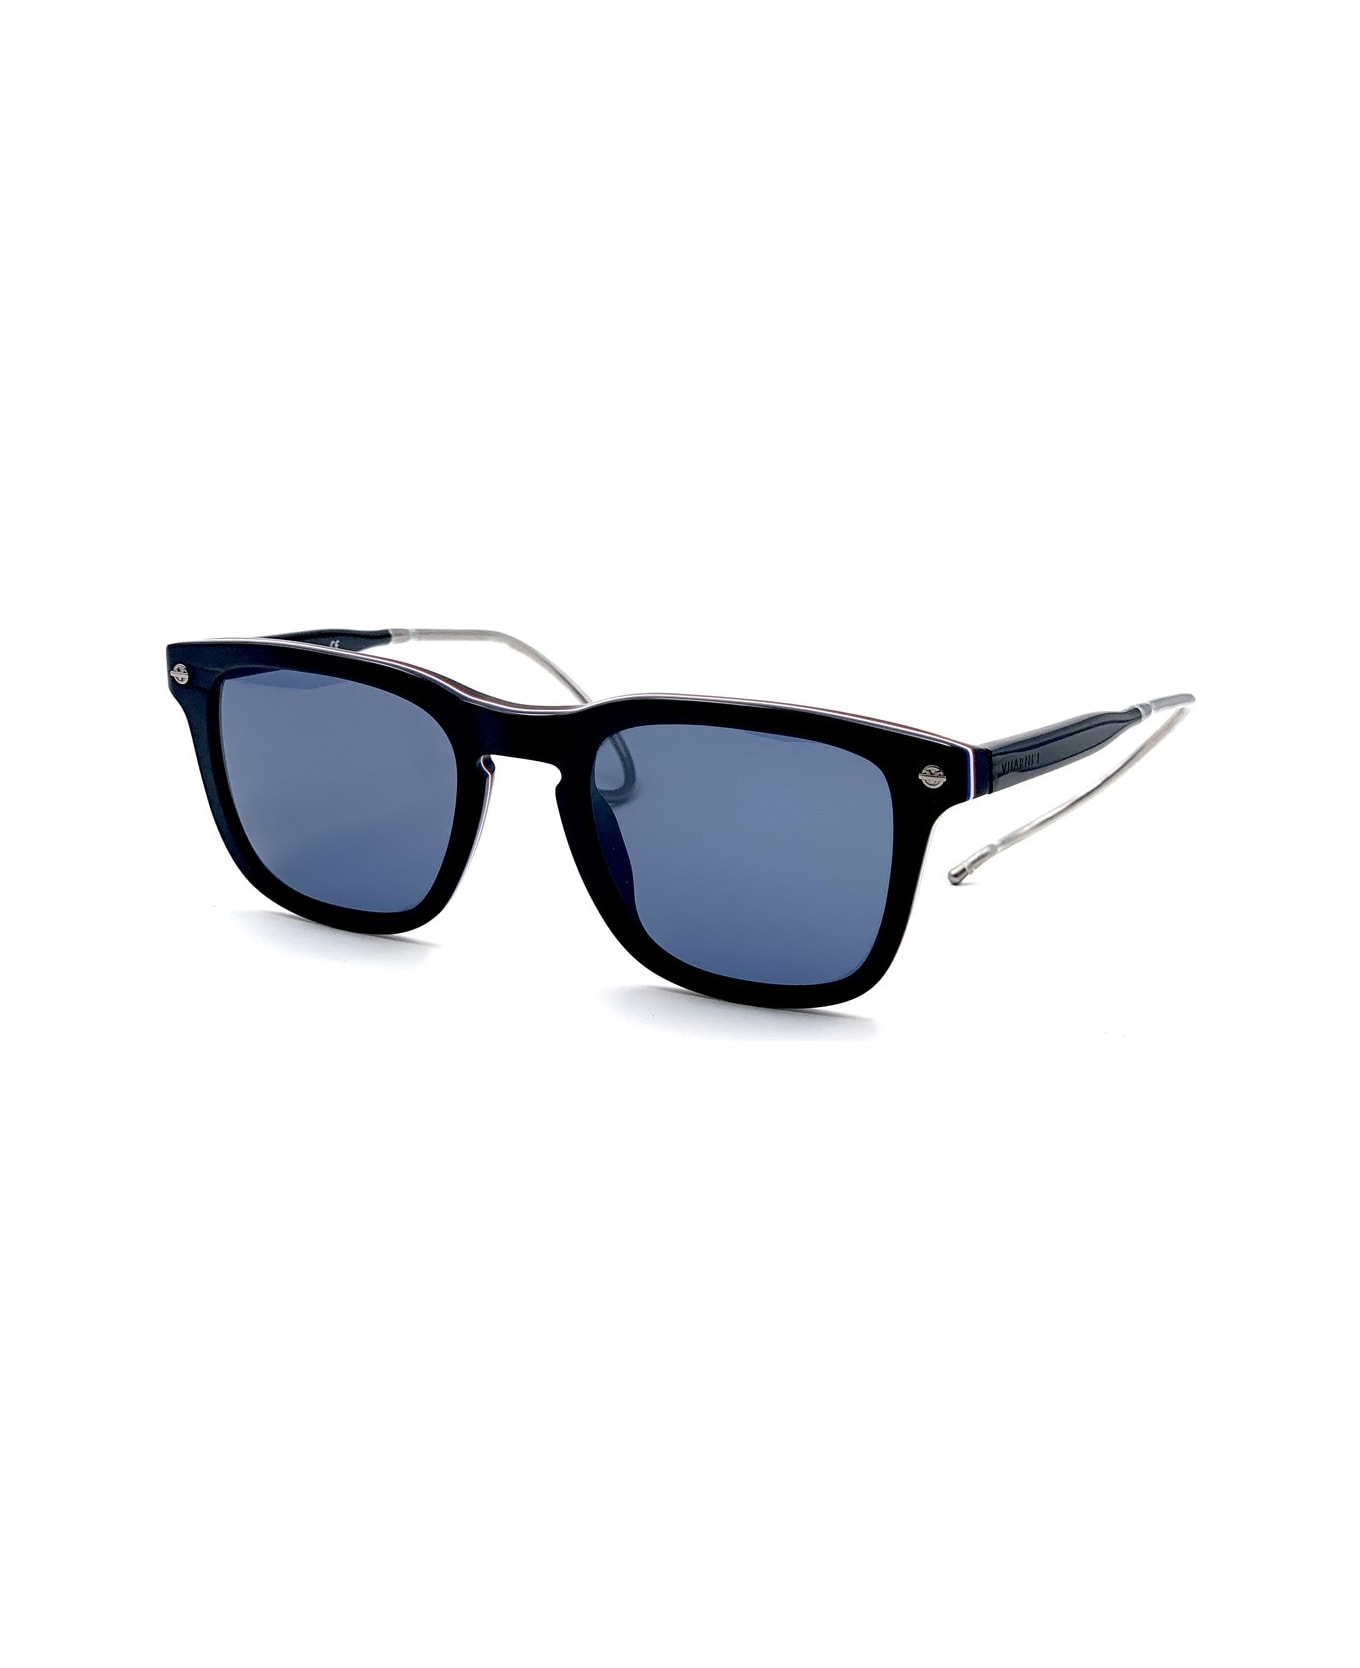 Vuarnet Vl1509 0002 Sunglasses - Nero サングラス